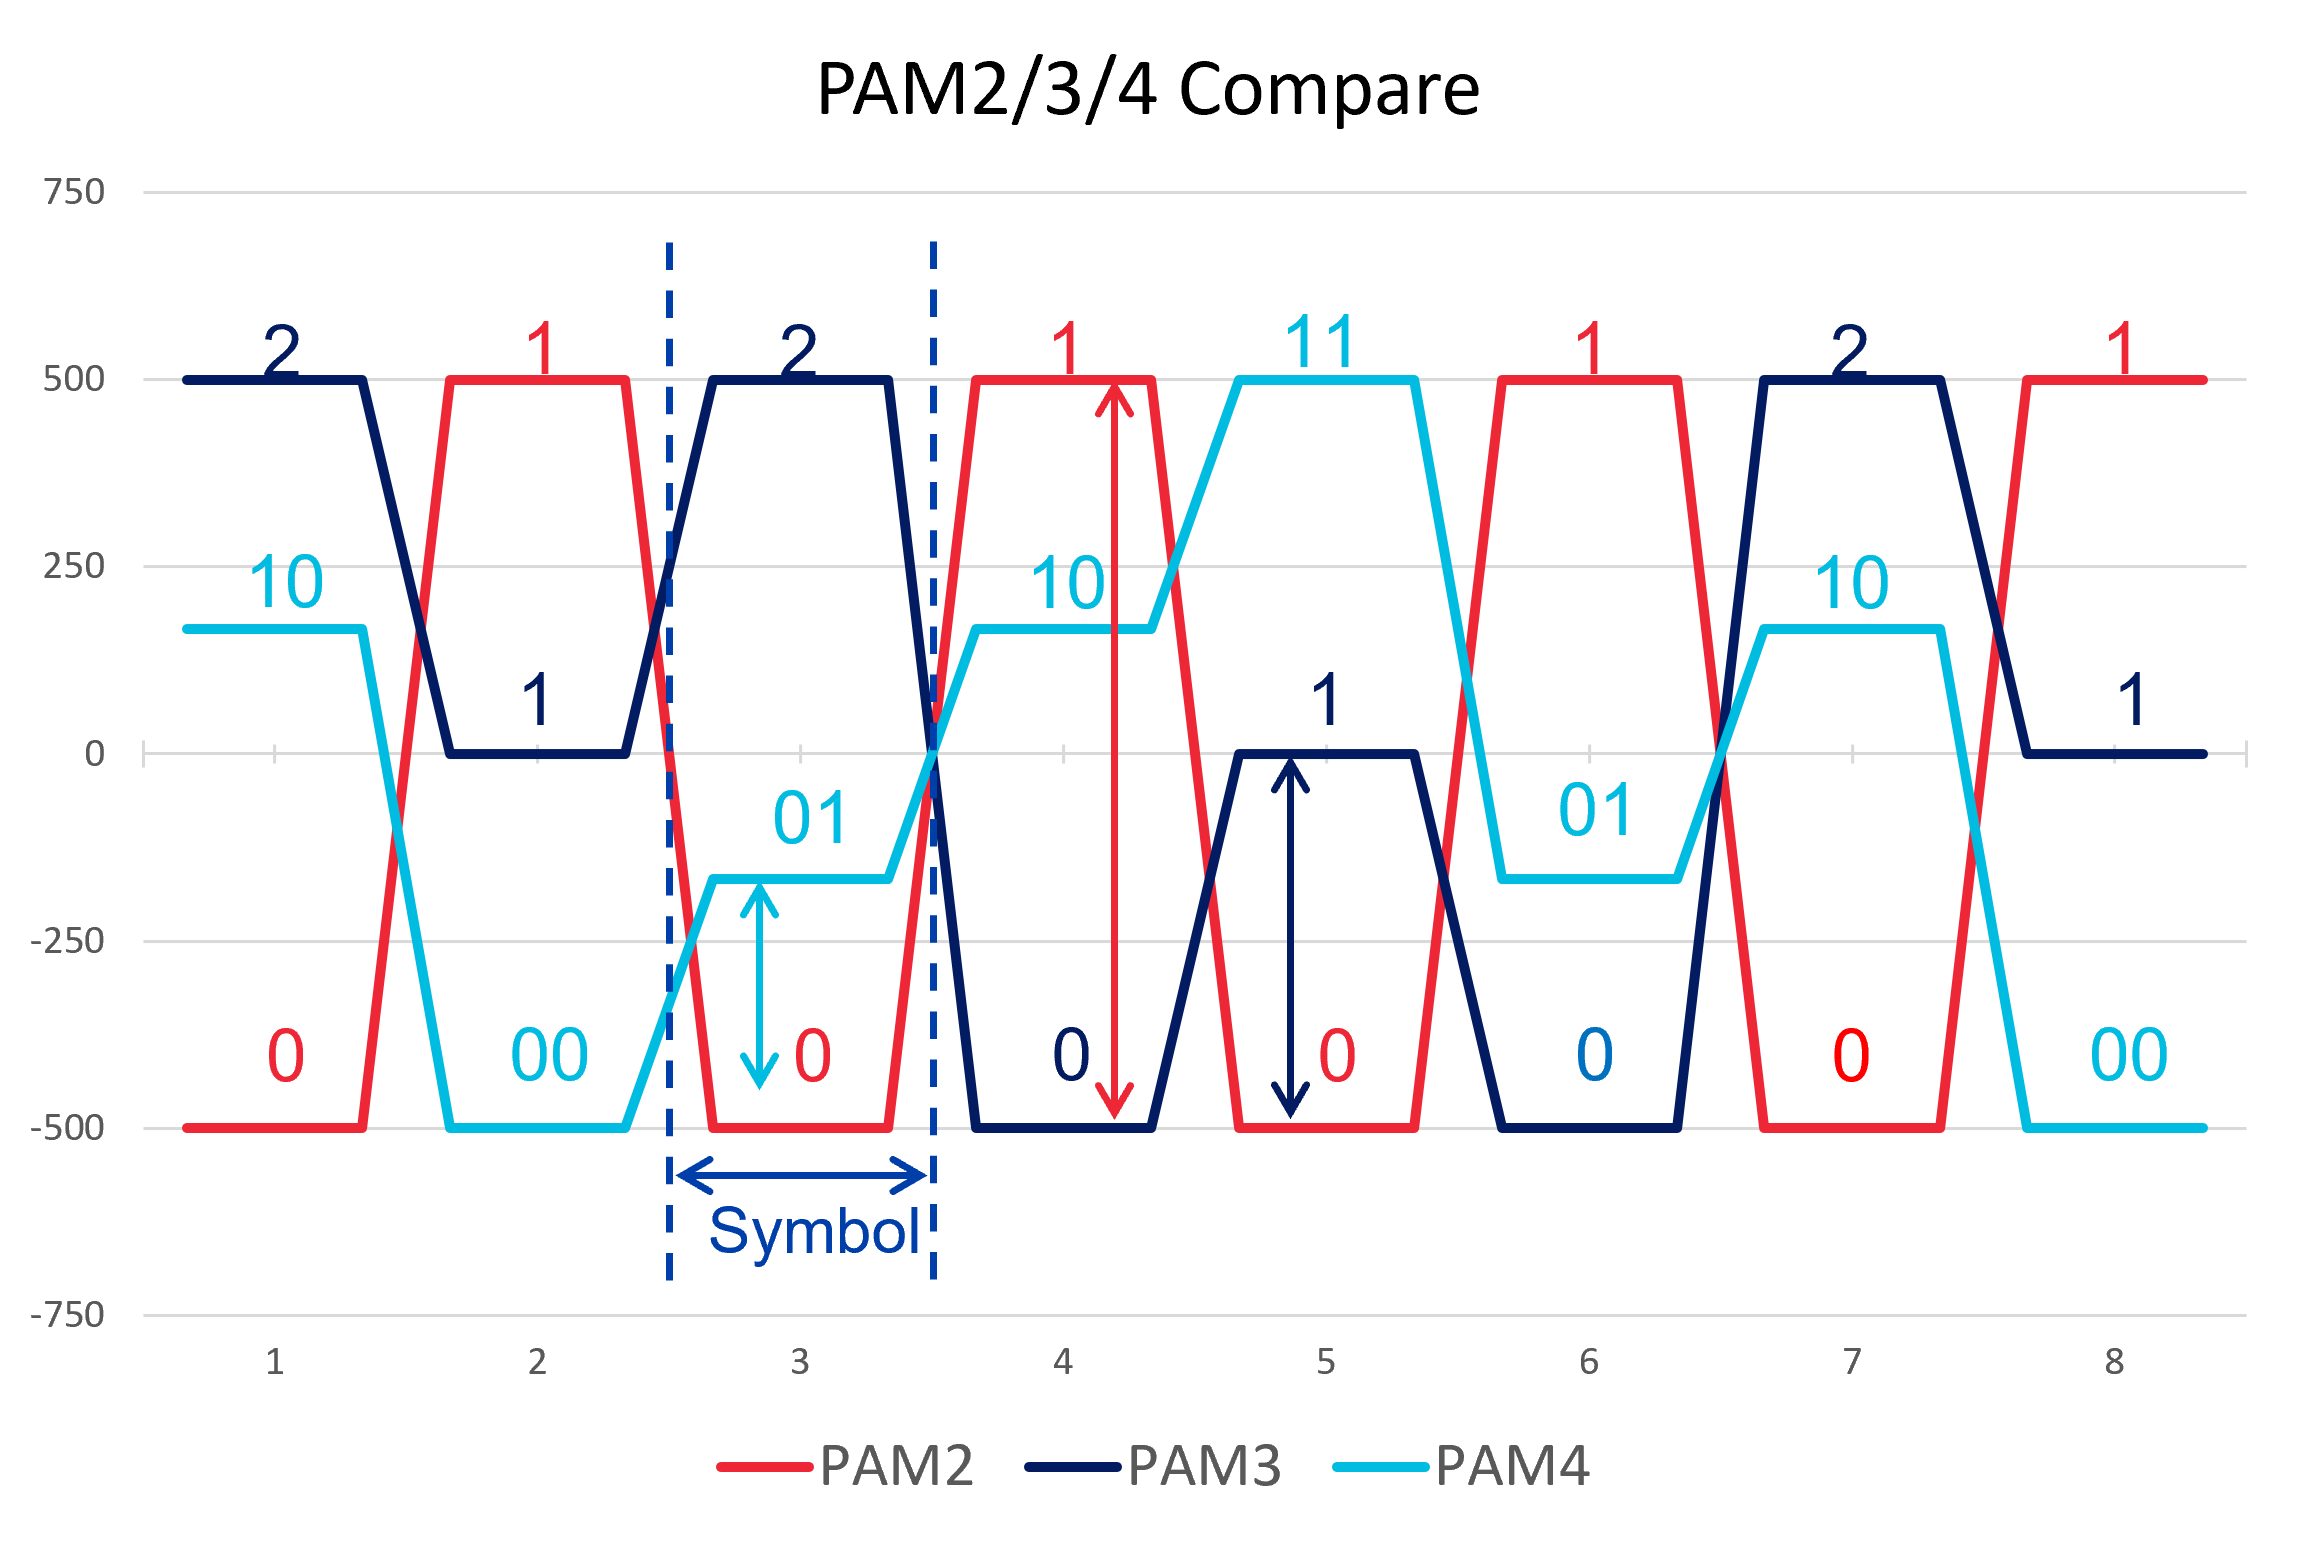 Pulse Amplitude Modulation level comparison chart between PAM2, PAM3, and PAM4